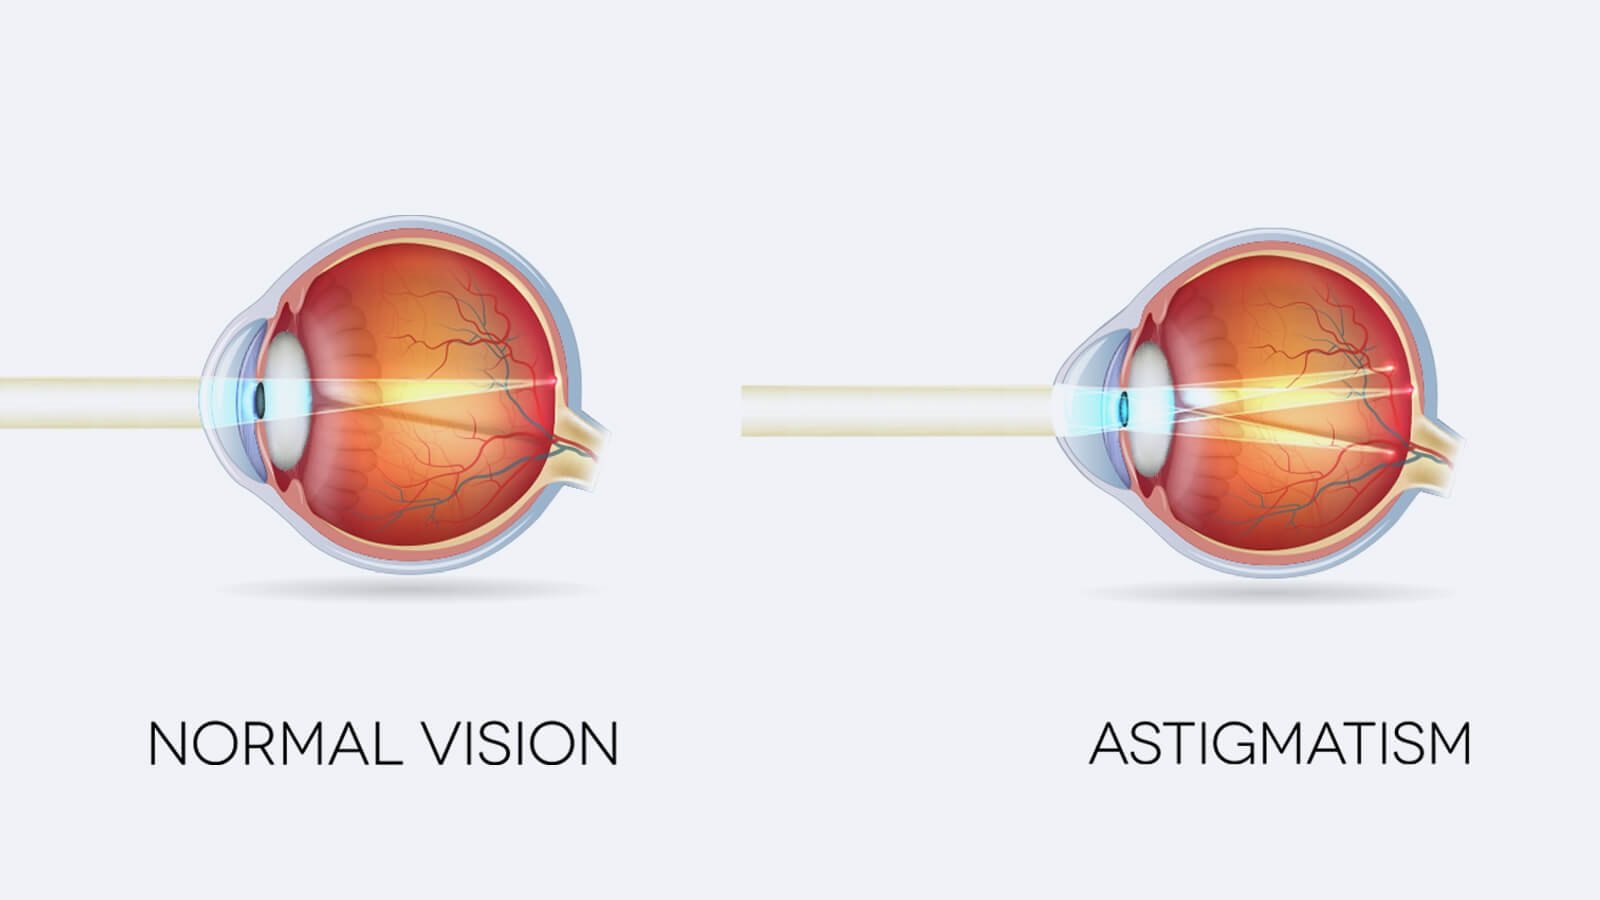 viziune 0 9 astigmatism